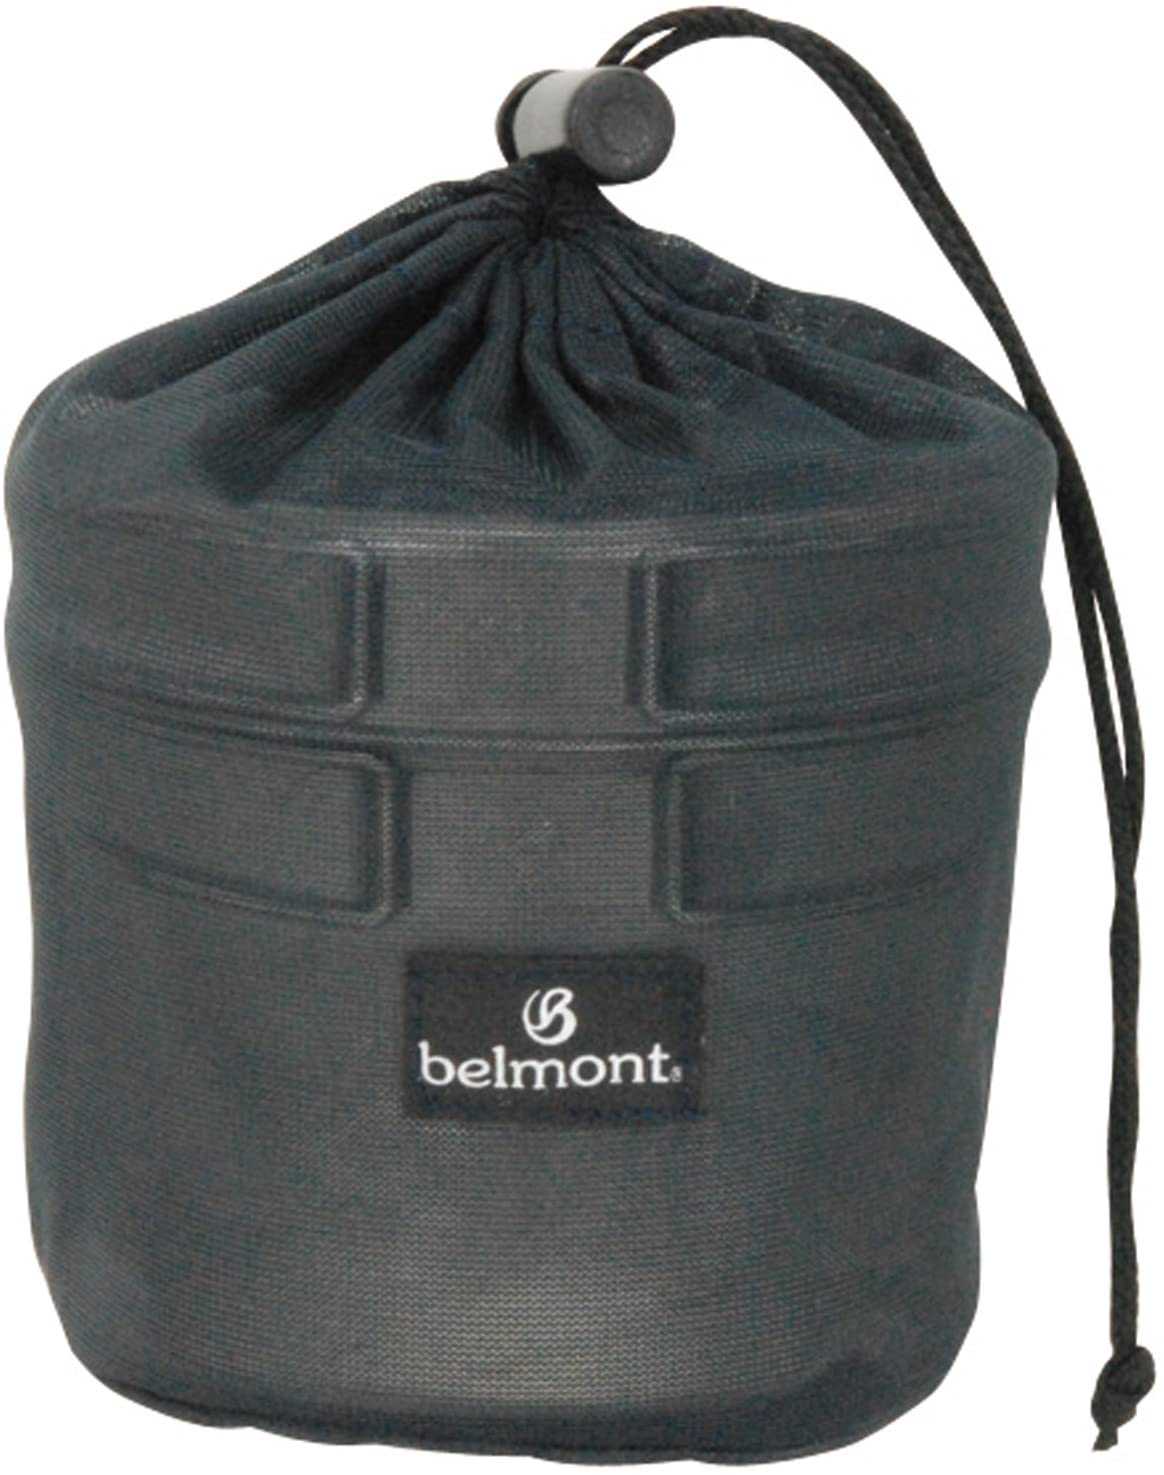 Belmont Titanium Cooker Deep (S) BM-092 鈦金屬鍋具組(深型)(小)